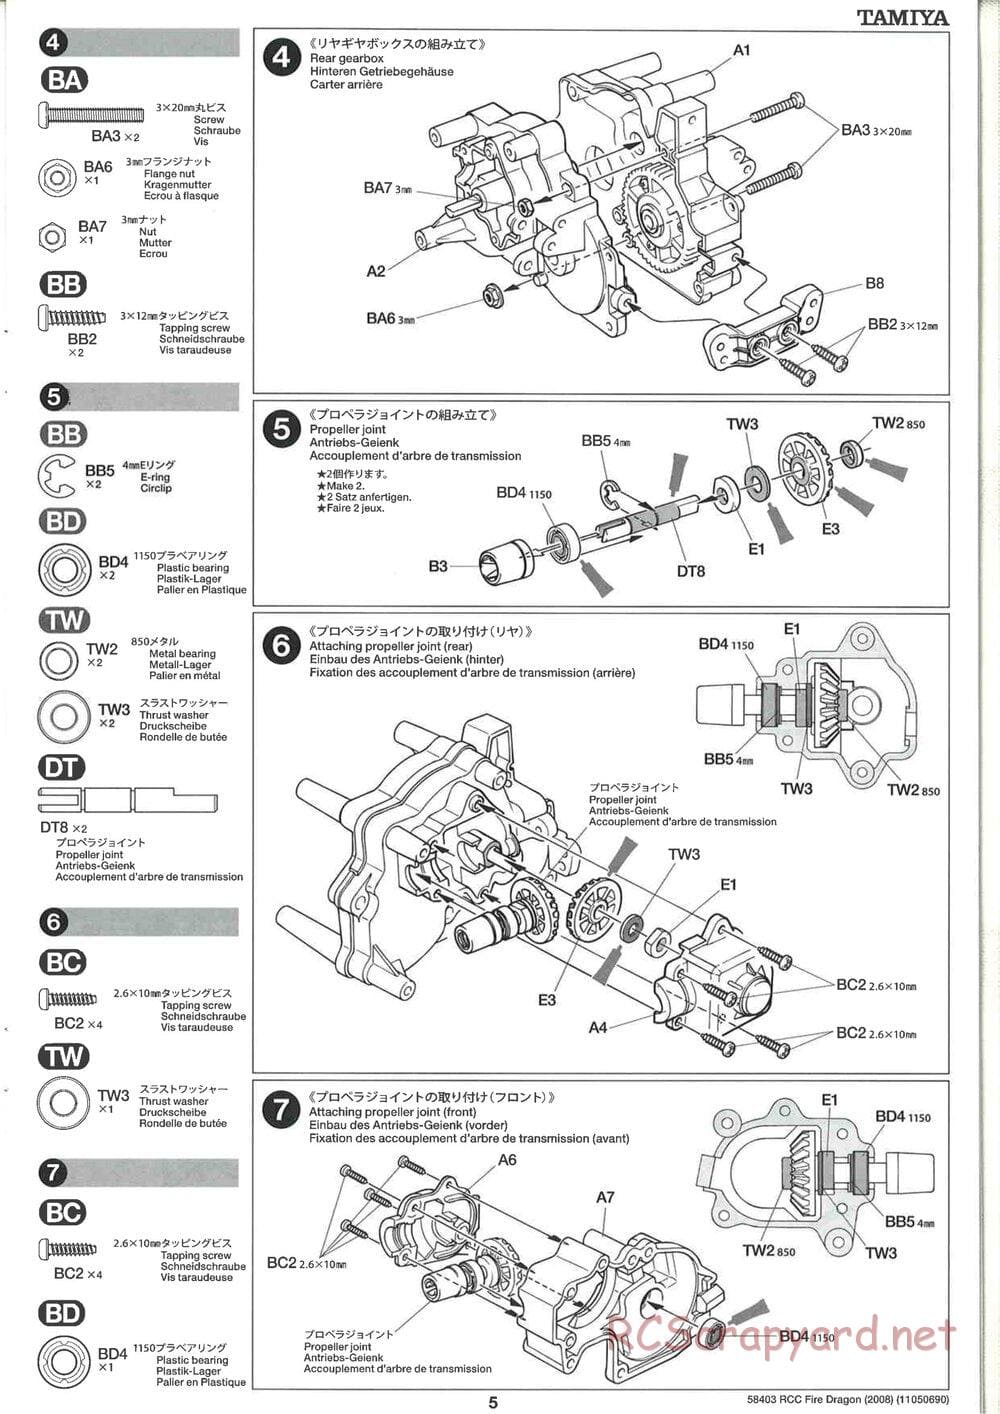 Tamiya - Fire Dragon 2008 - TS2 Chassis - Manual - Page 5